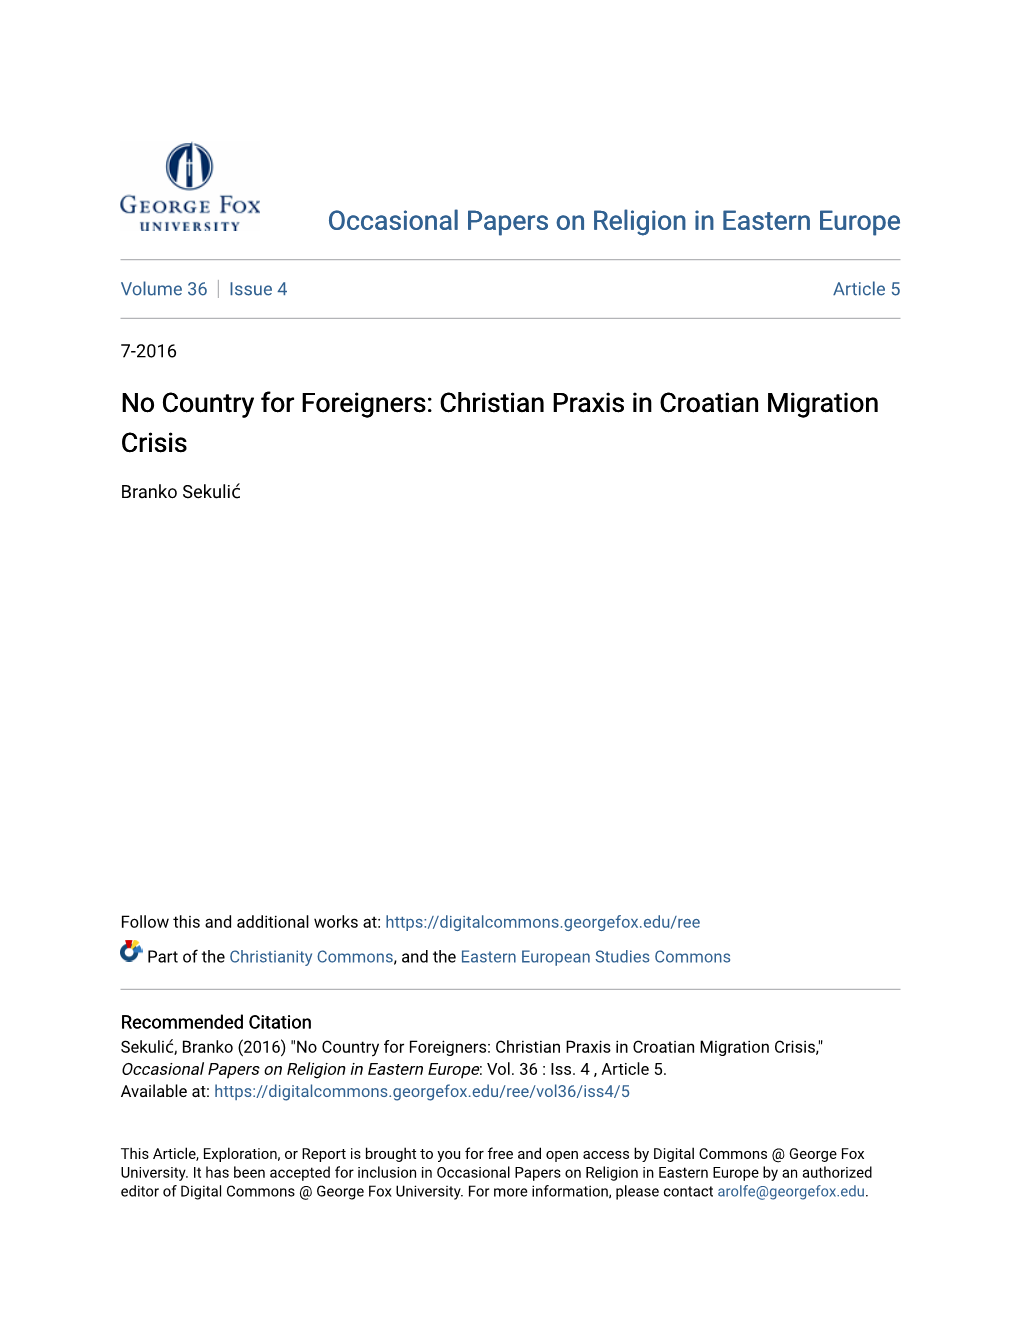 Christian Praxis in Croatian Migration Crisis